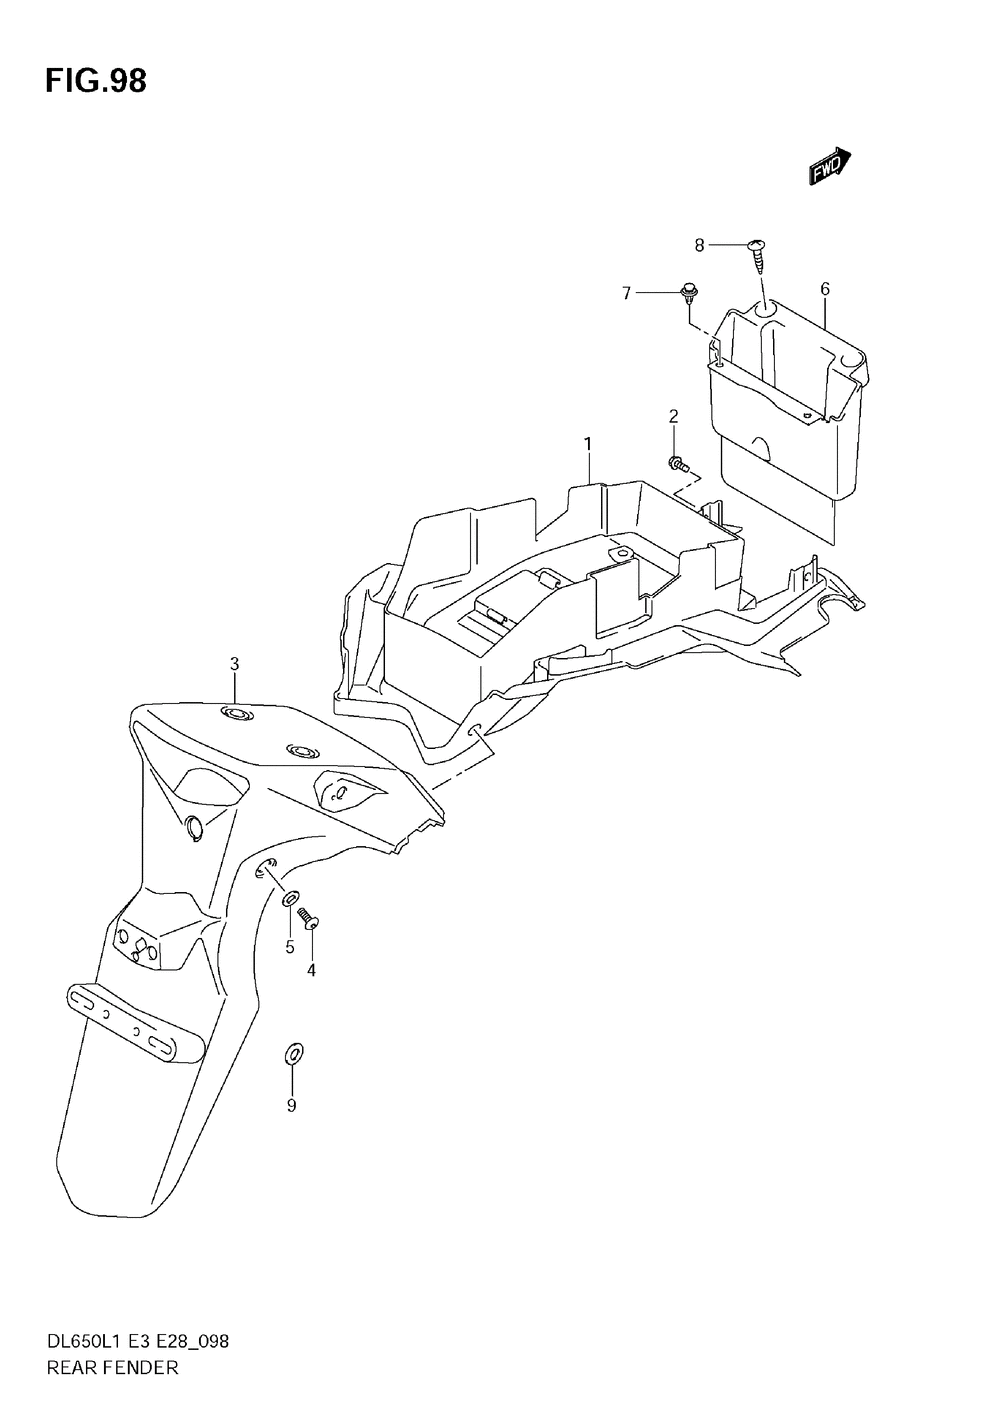 Rear fender (dl650 l1 e3)